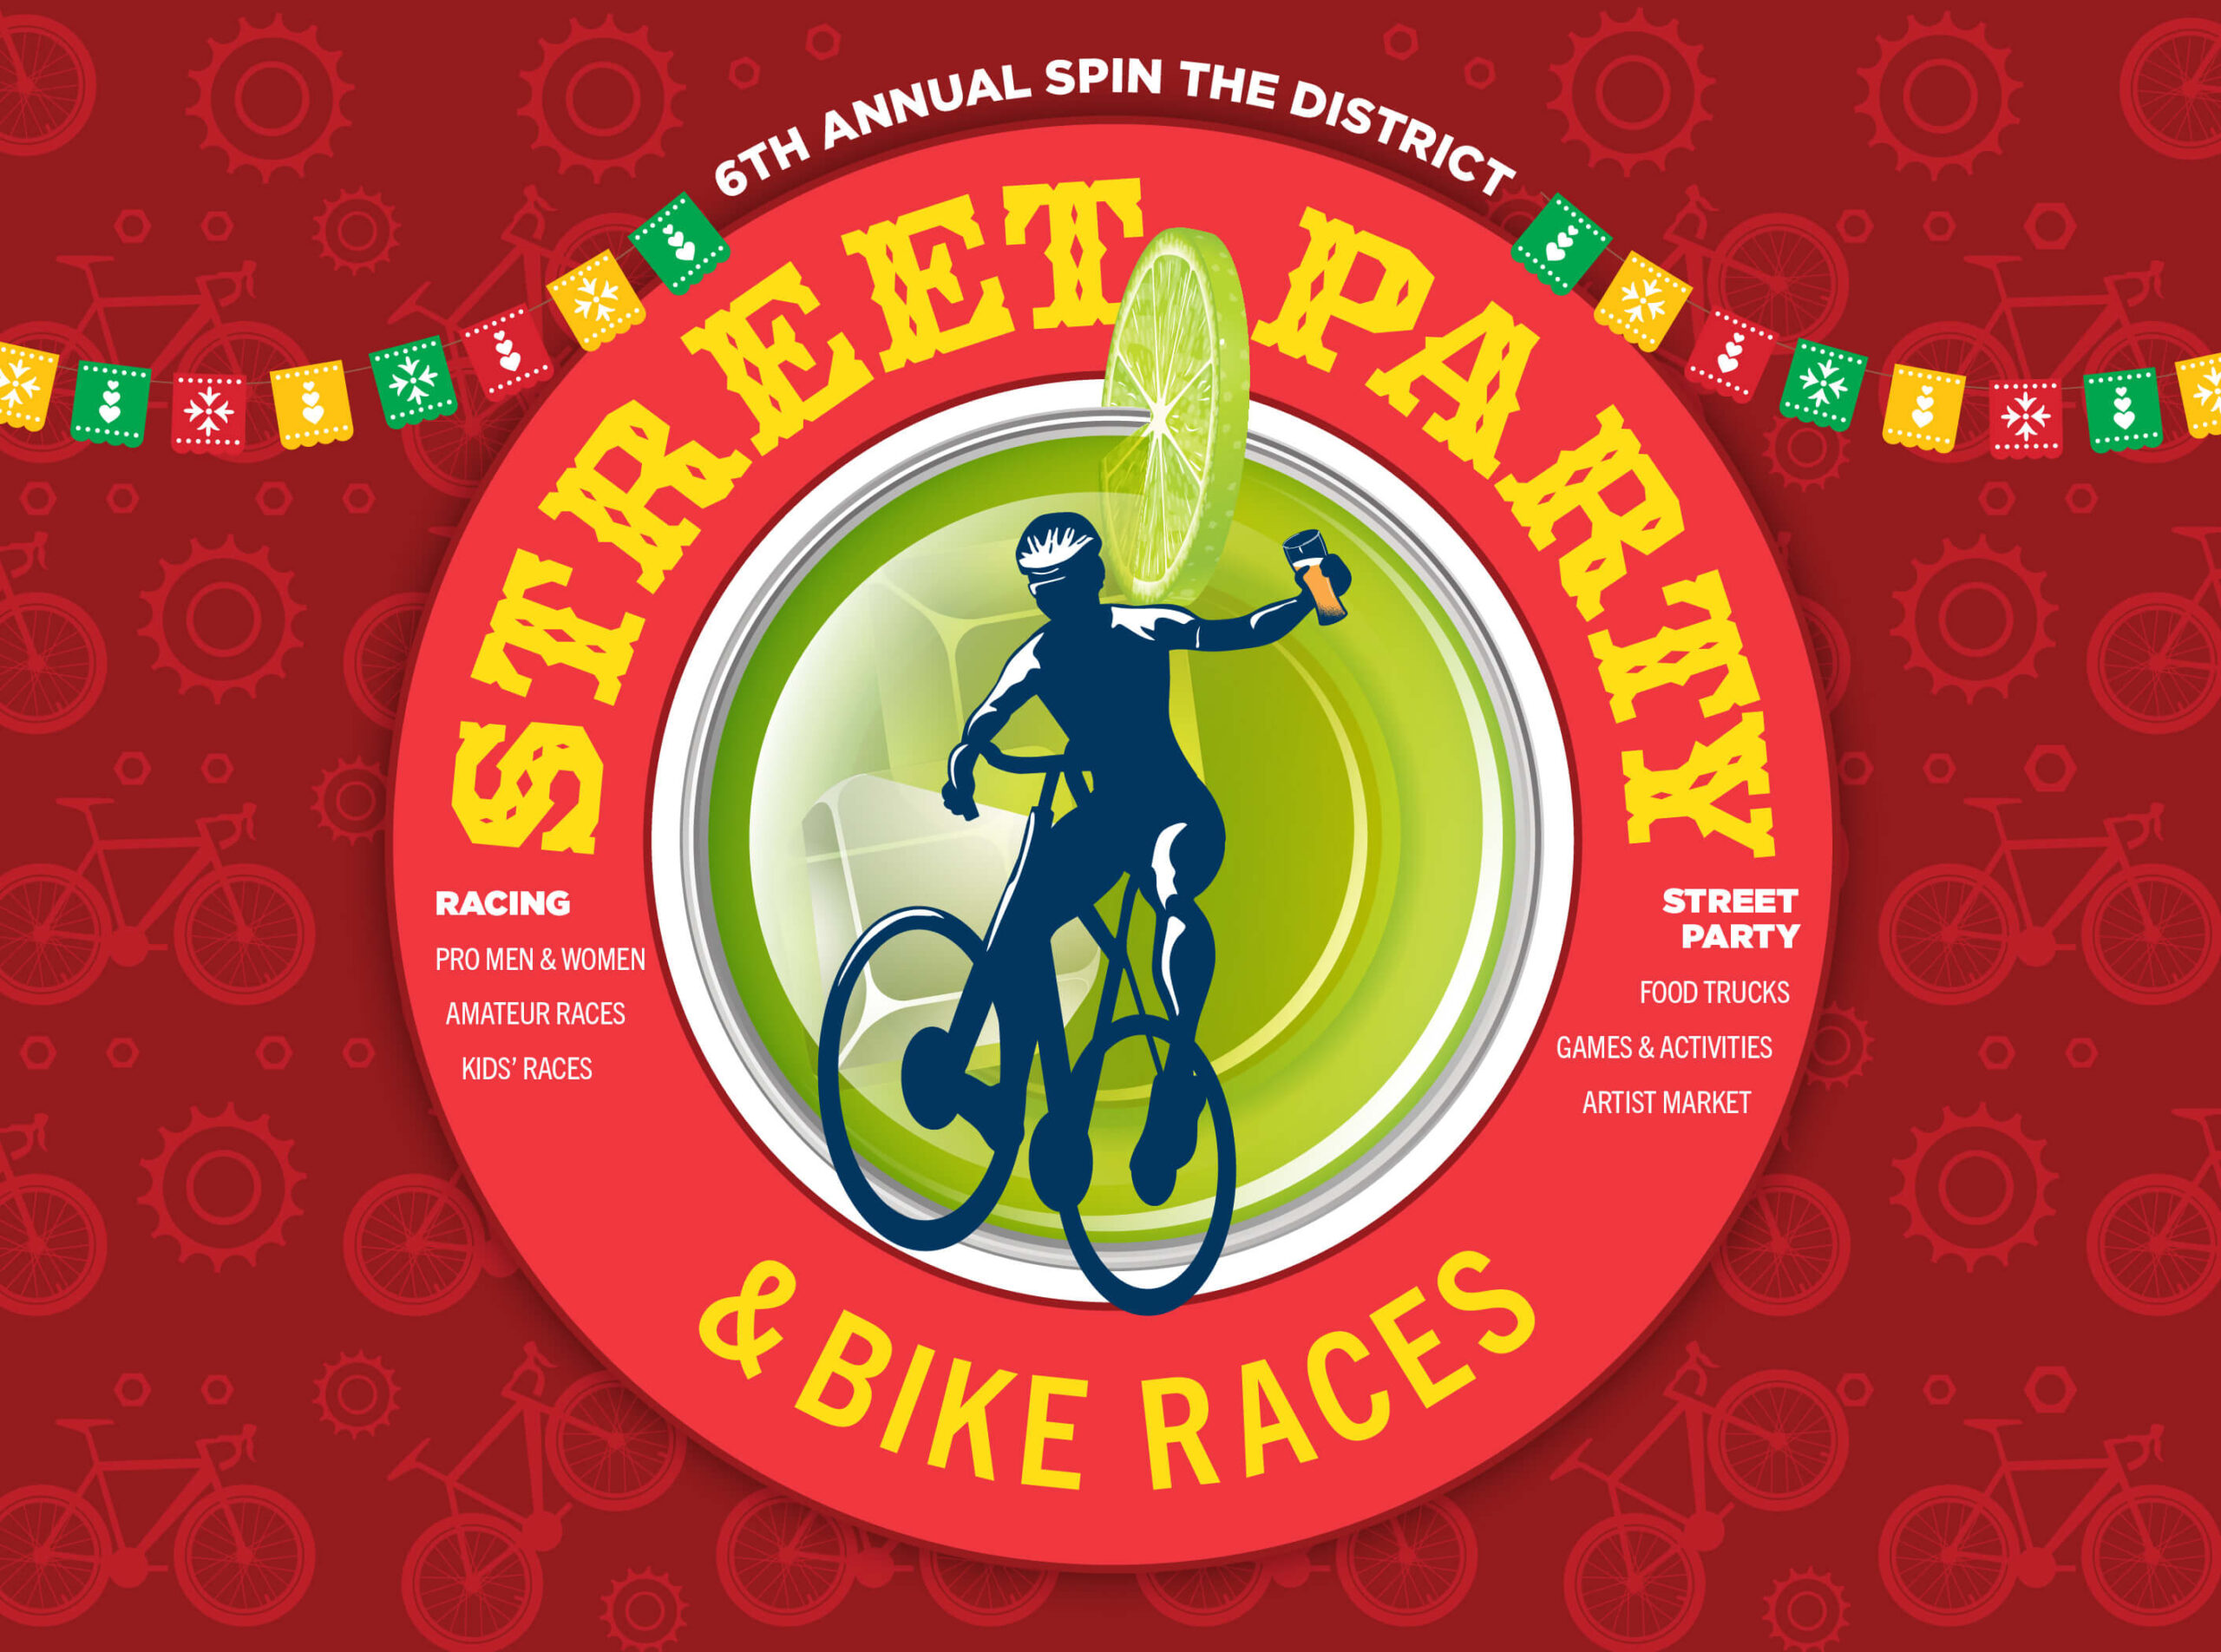 Street Party & Bike Races